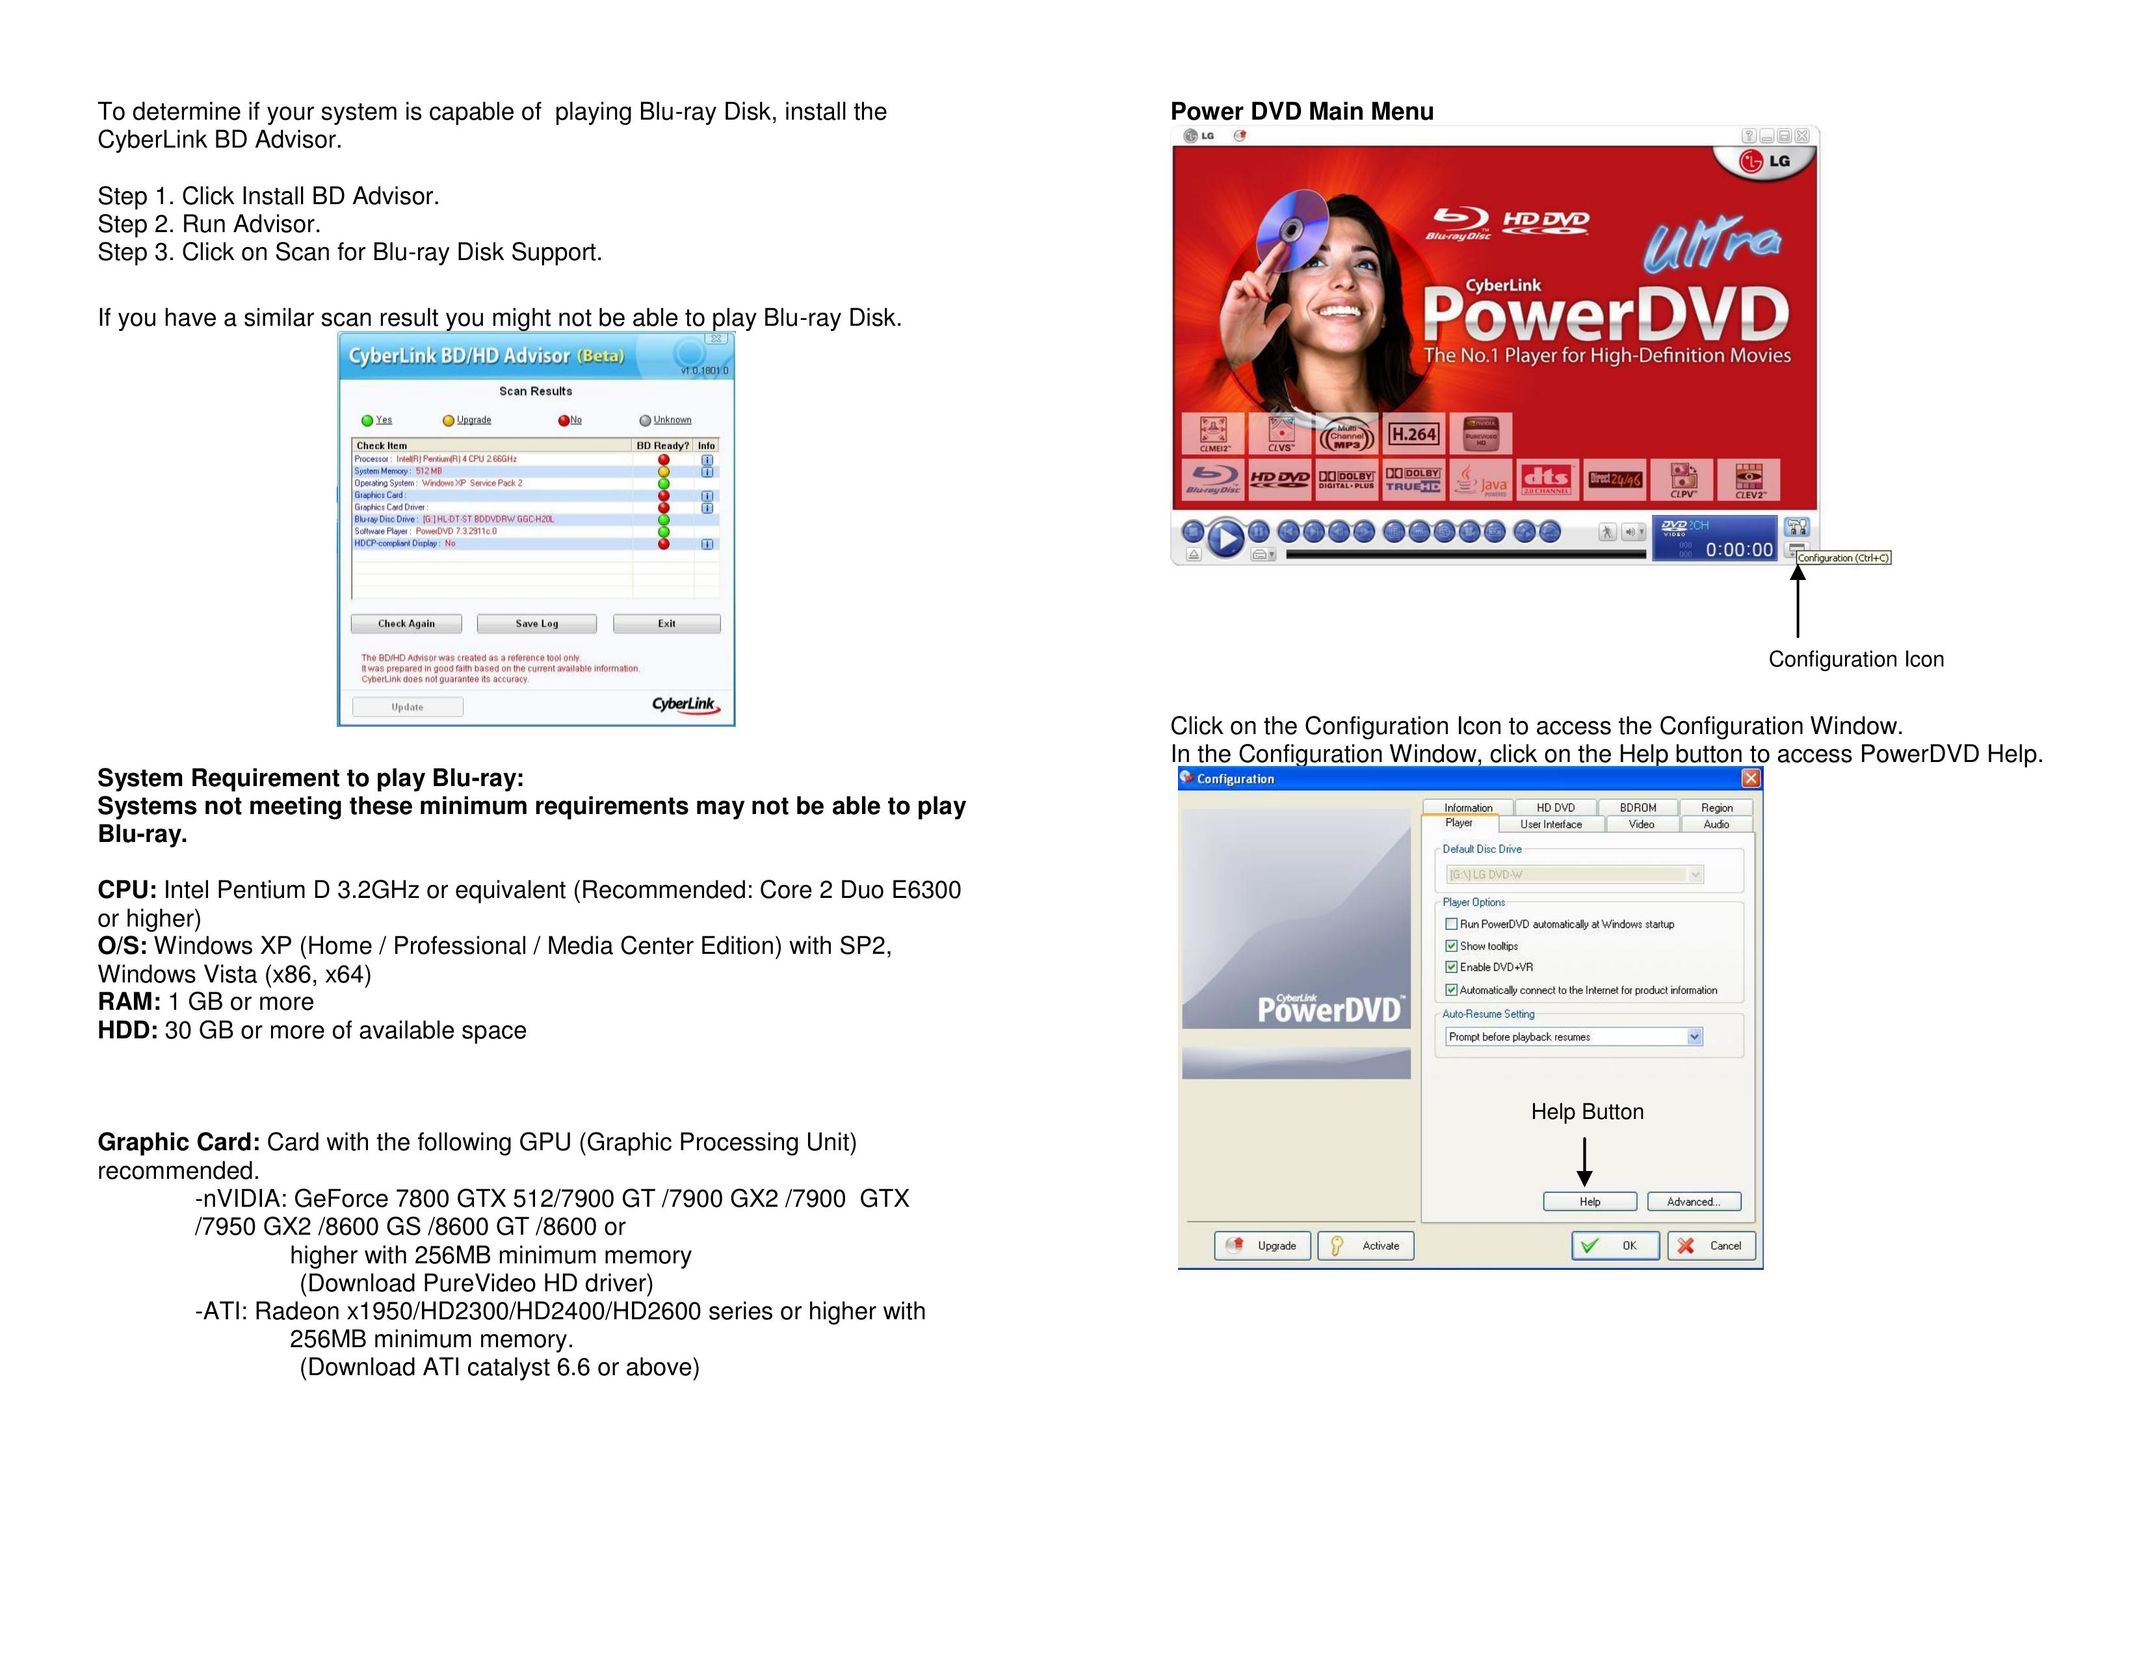 Addonics Technologies ZBW-10LS2EU Blu-ray Player User Manual (Page 3)